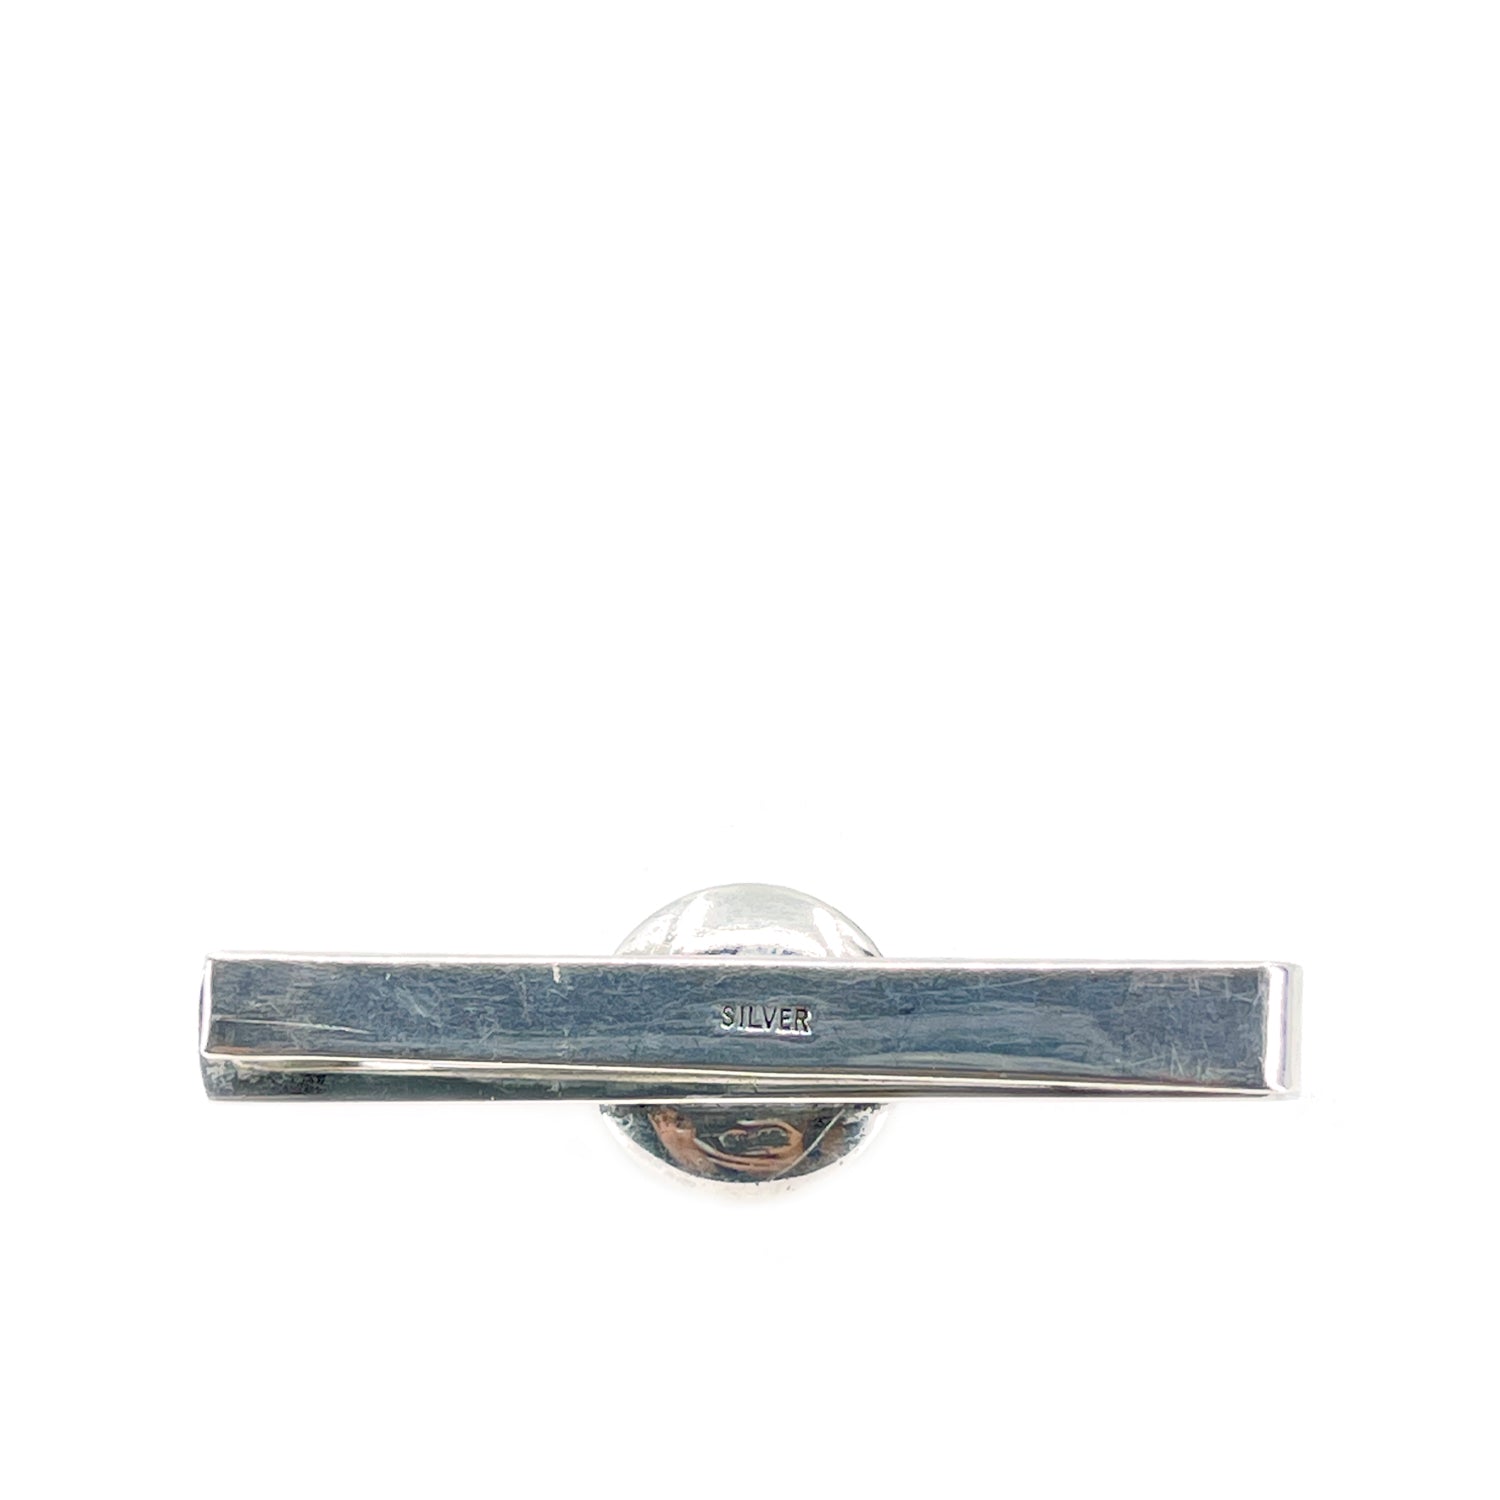 Engraved Black Onyx Mid Century Men's Japanese Saltwater Akoya Cultured Pearl Tie Bar- Sterling Silver